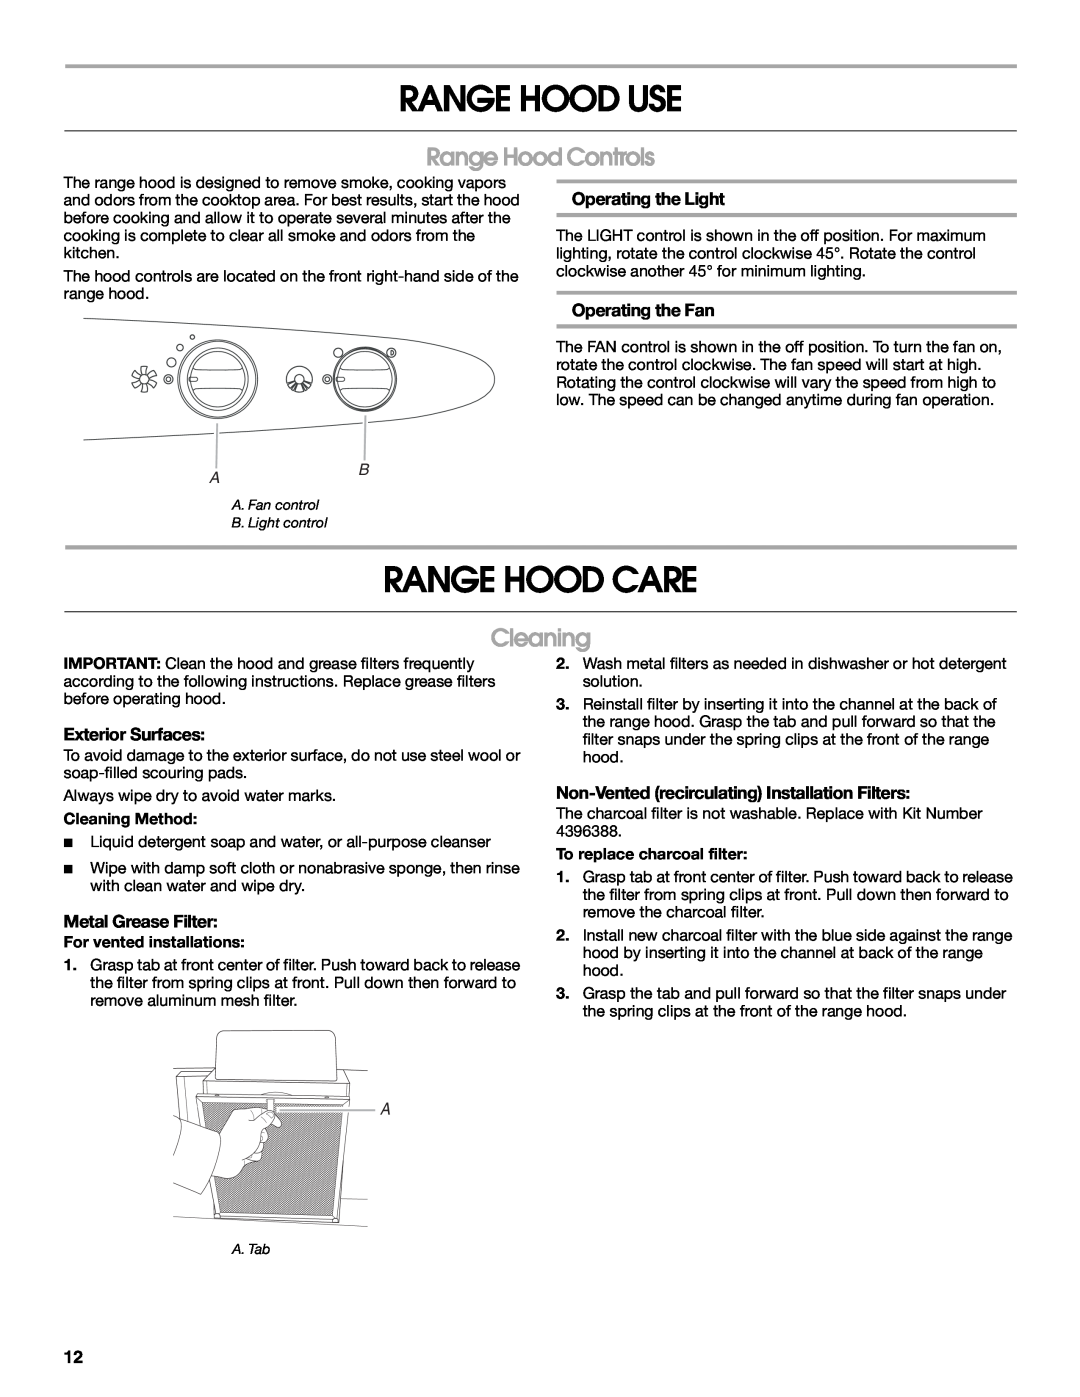 Whirlpool W10240580A Range Hood Use, Range Hood Care, Range Hood Controls, Operating the Light, Cleaning Method 